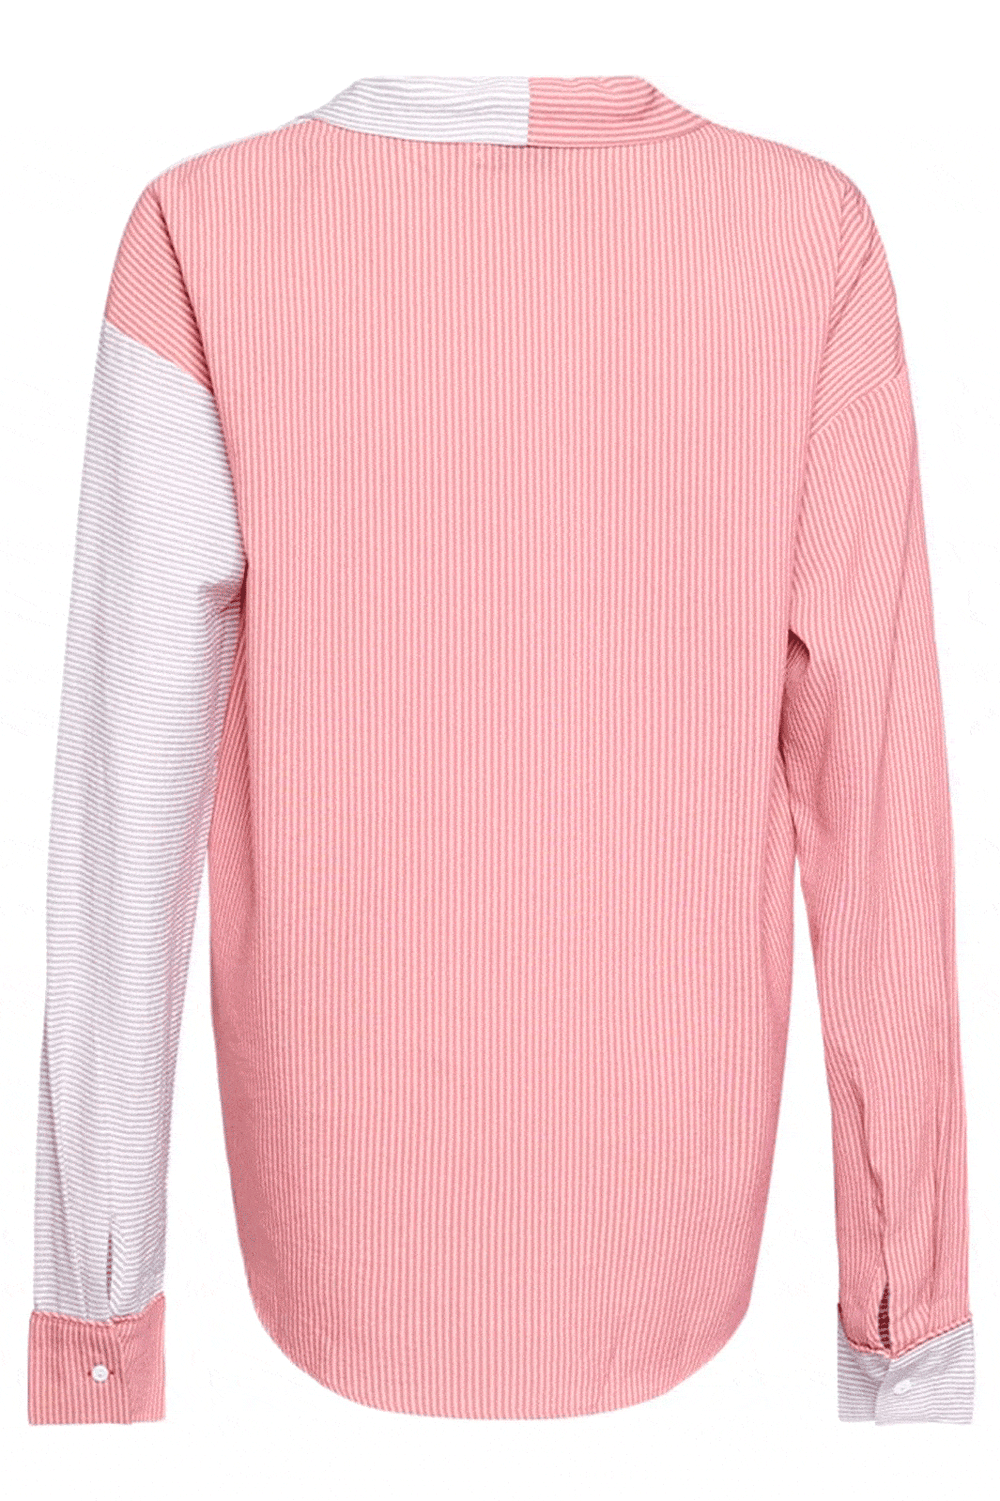 Noella - Vally Shirt - Pink Skjorter 